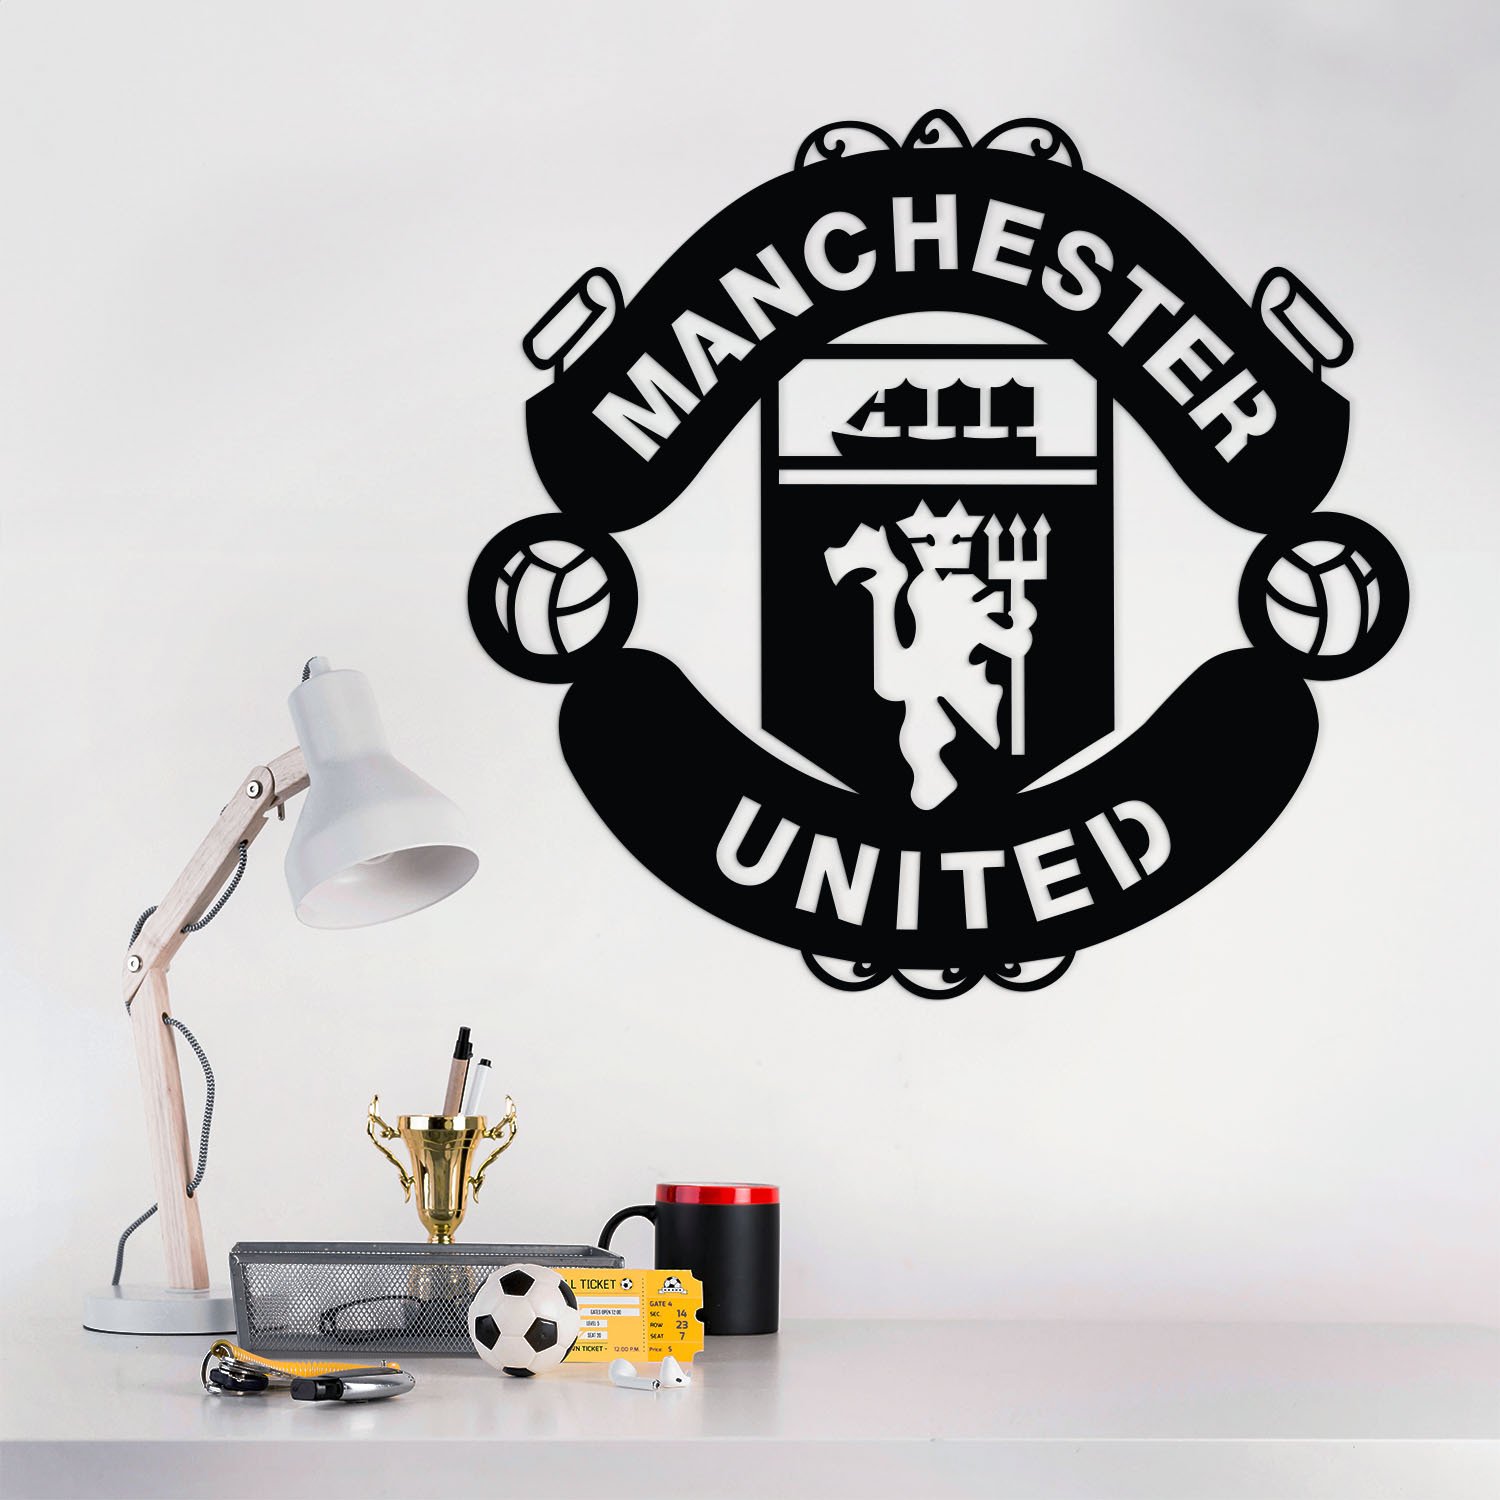 Drevený obraz - Logo Manchester United